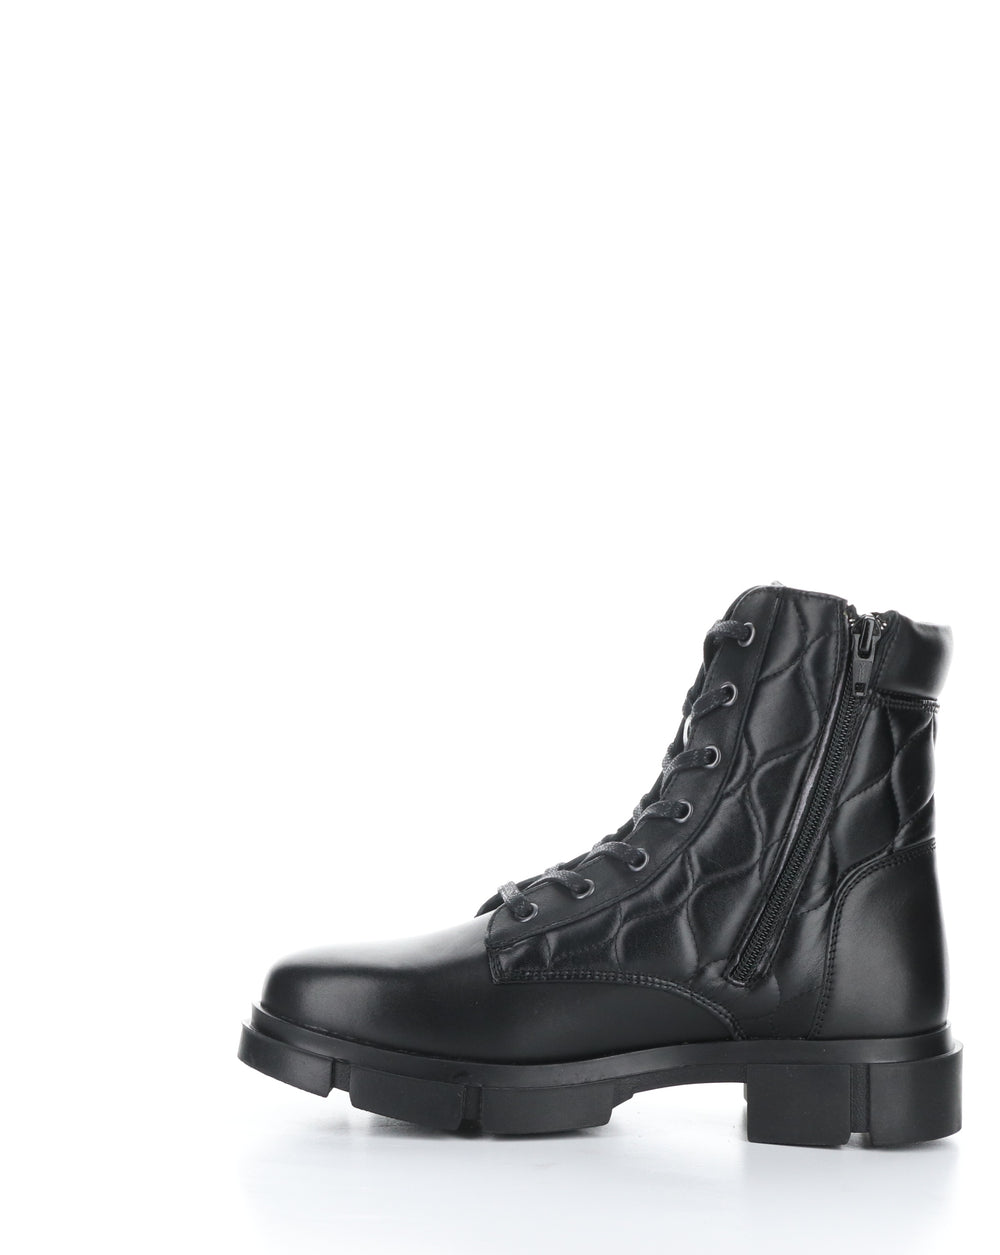 LIBEL BLACK Round Toe Boots